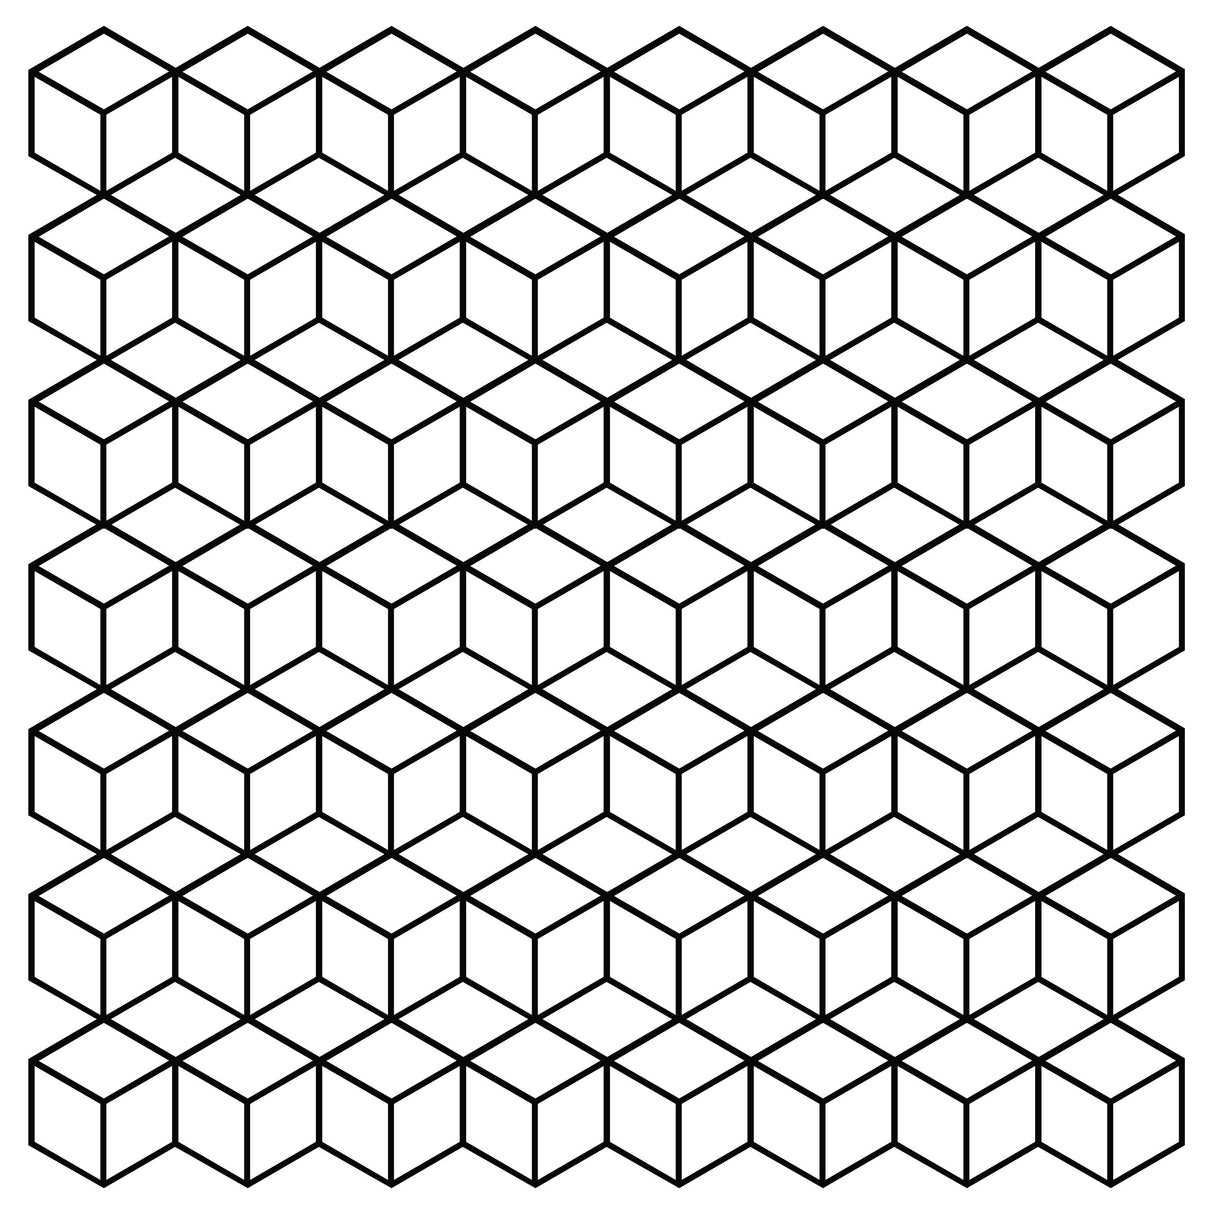 Geometric Wall Mural Decal - Hexagon Honeycomb Vinyl Bedroom Sticker